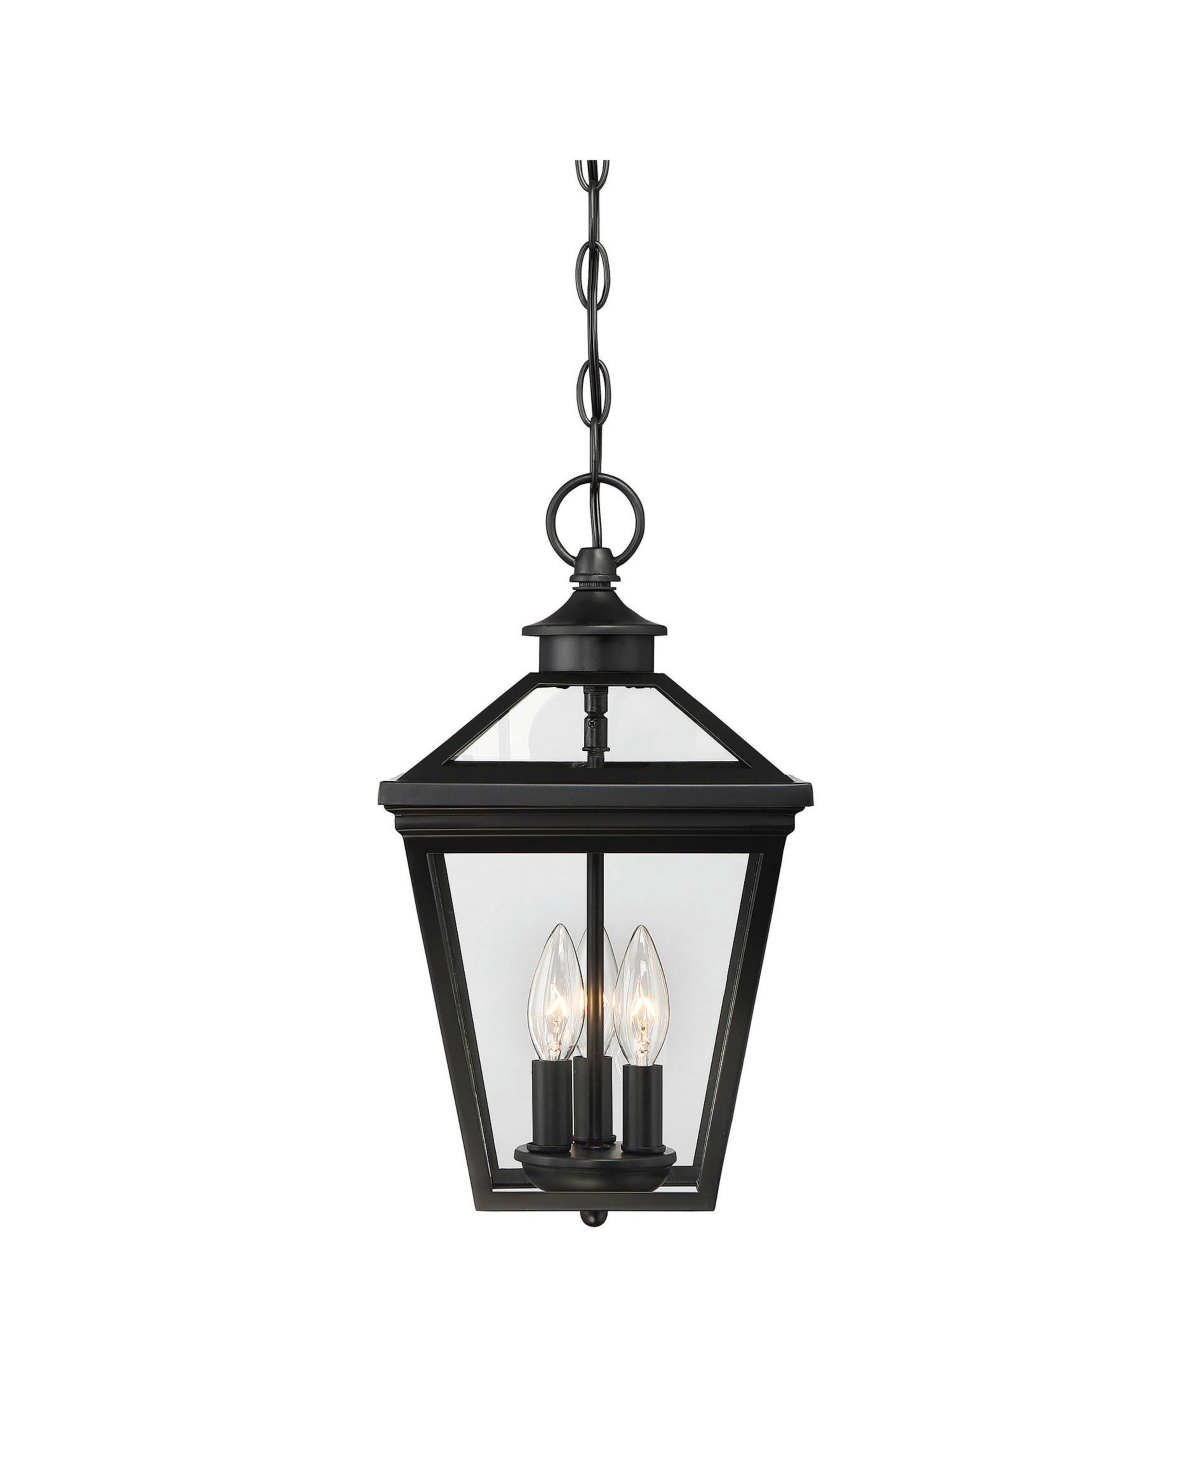 Ellijay Outdoor Hanging Lantern - Black